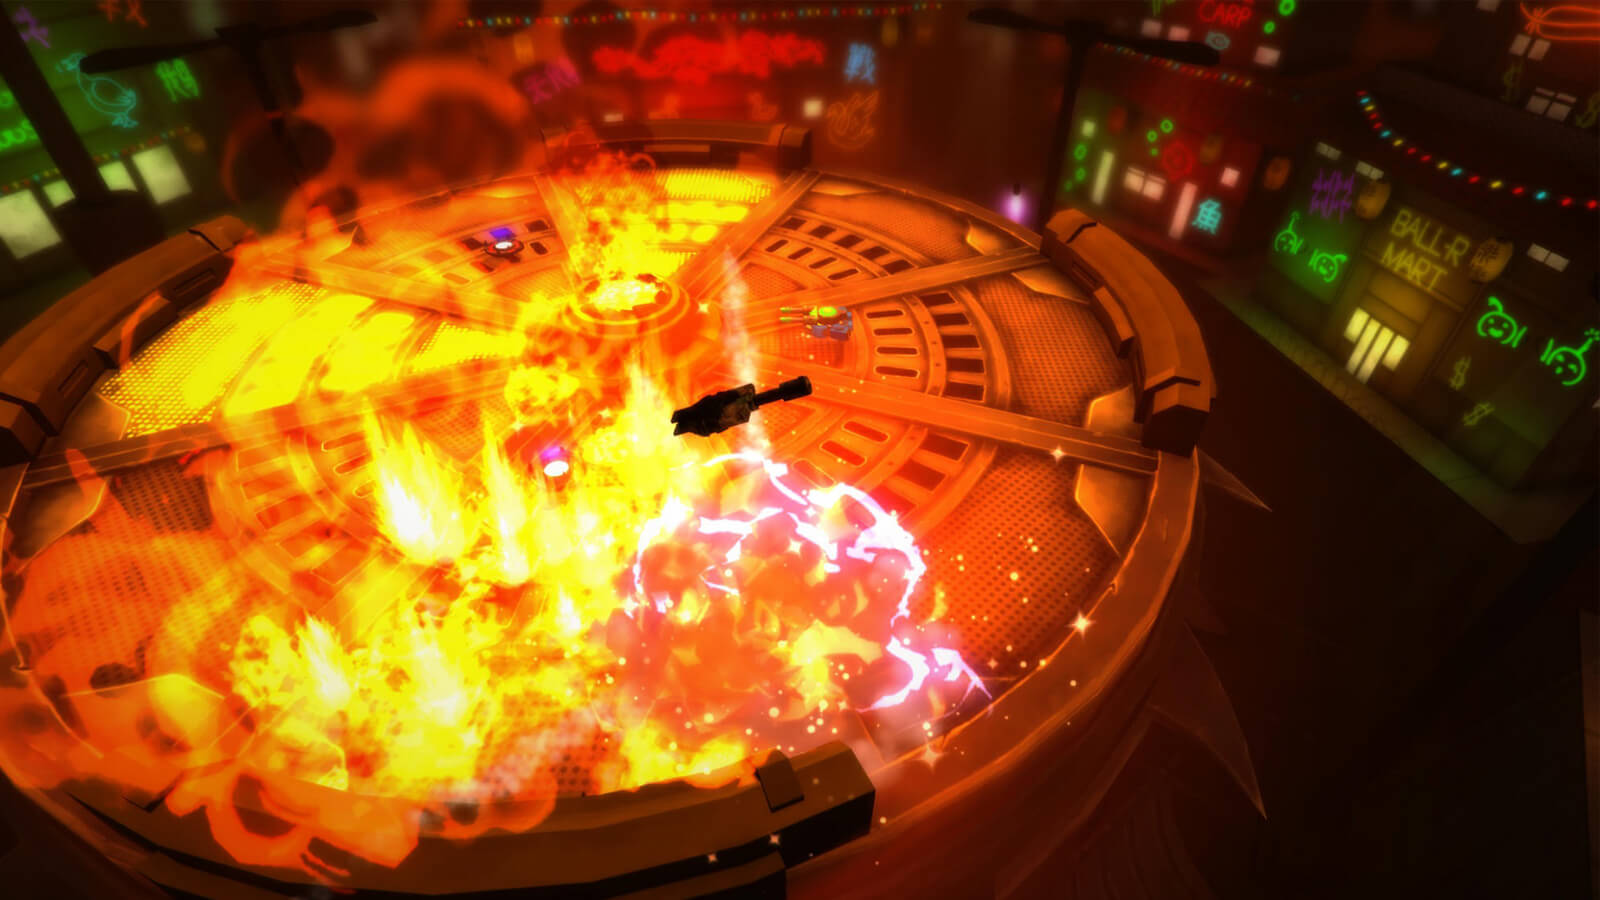 Flames engulf a metallic battle arena.